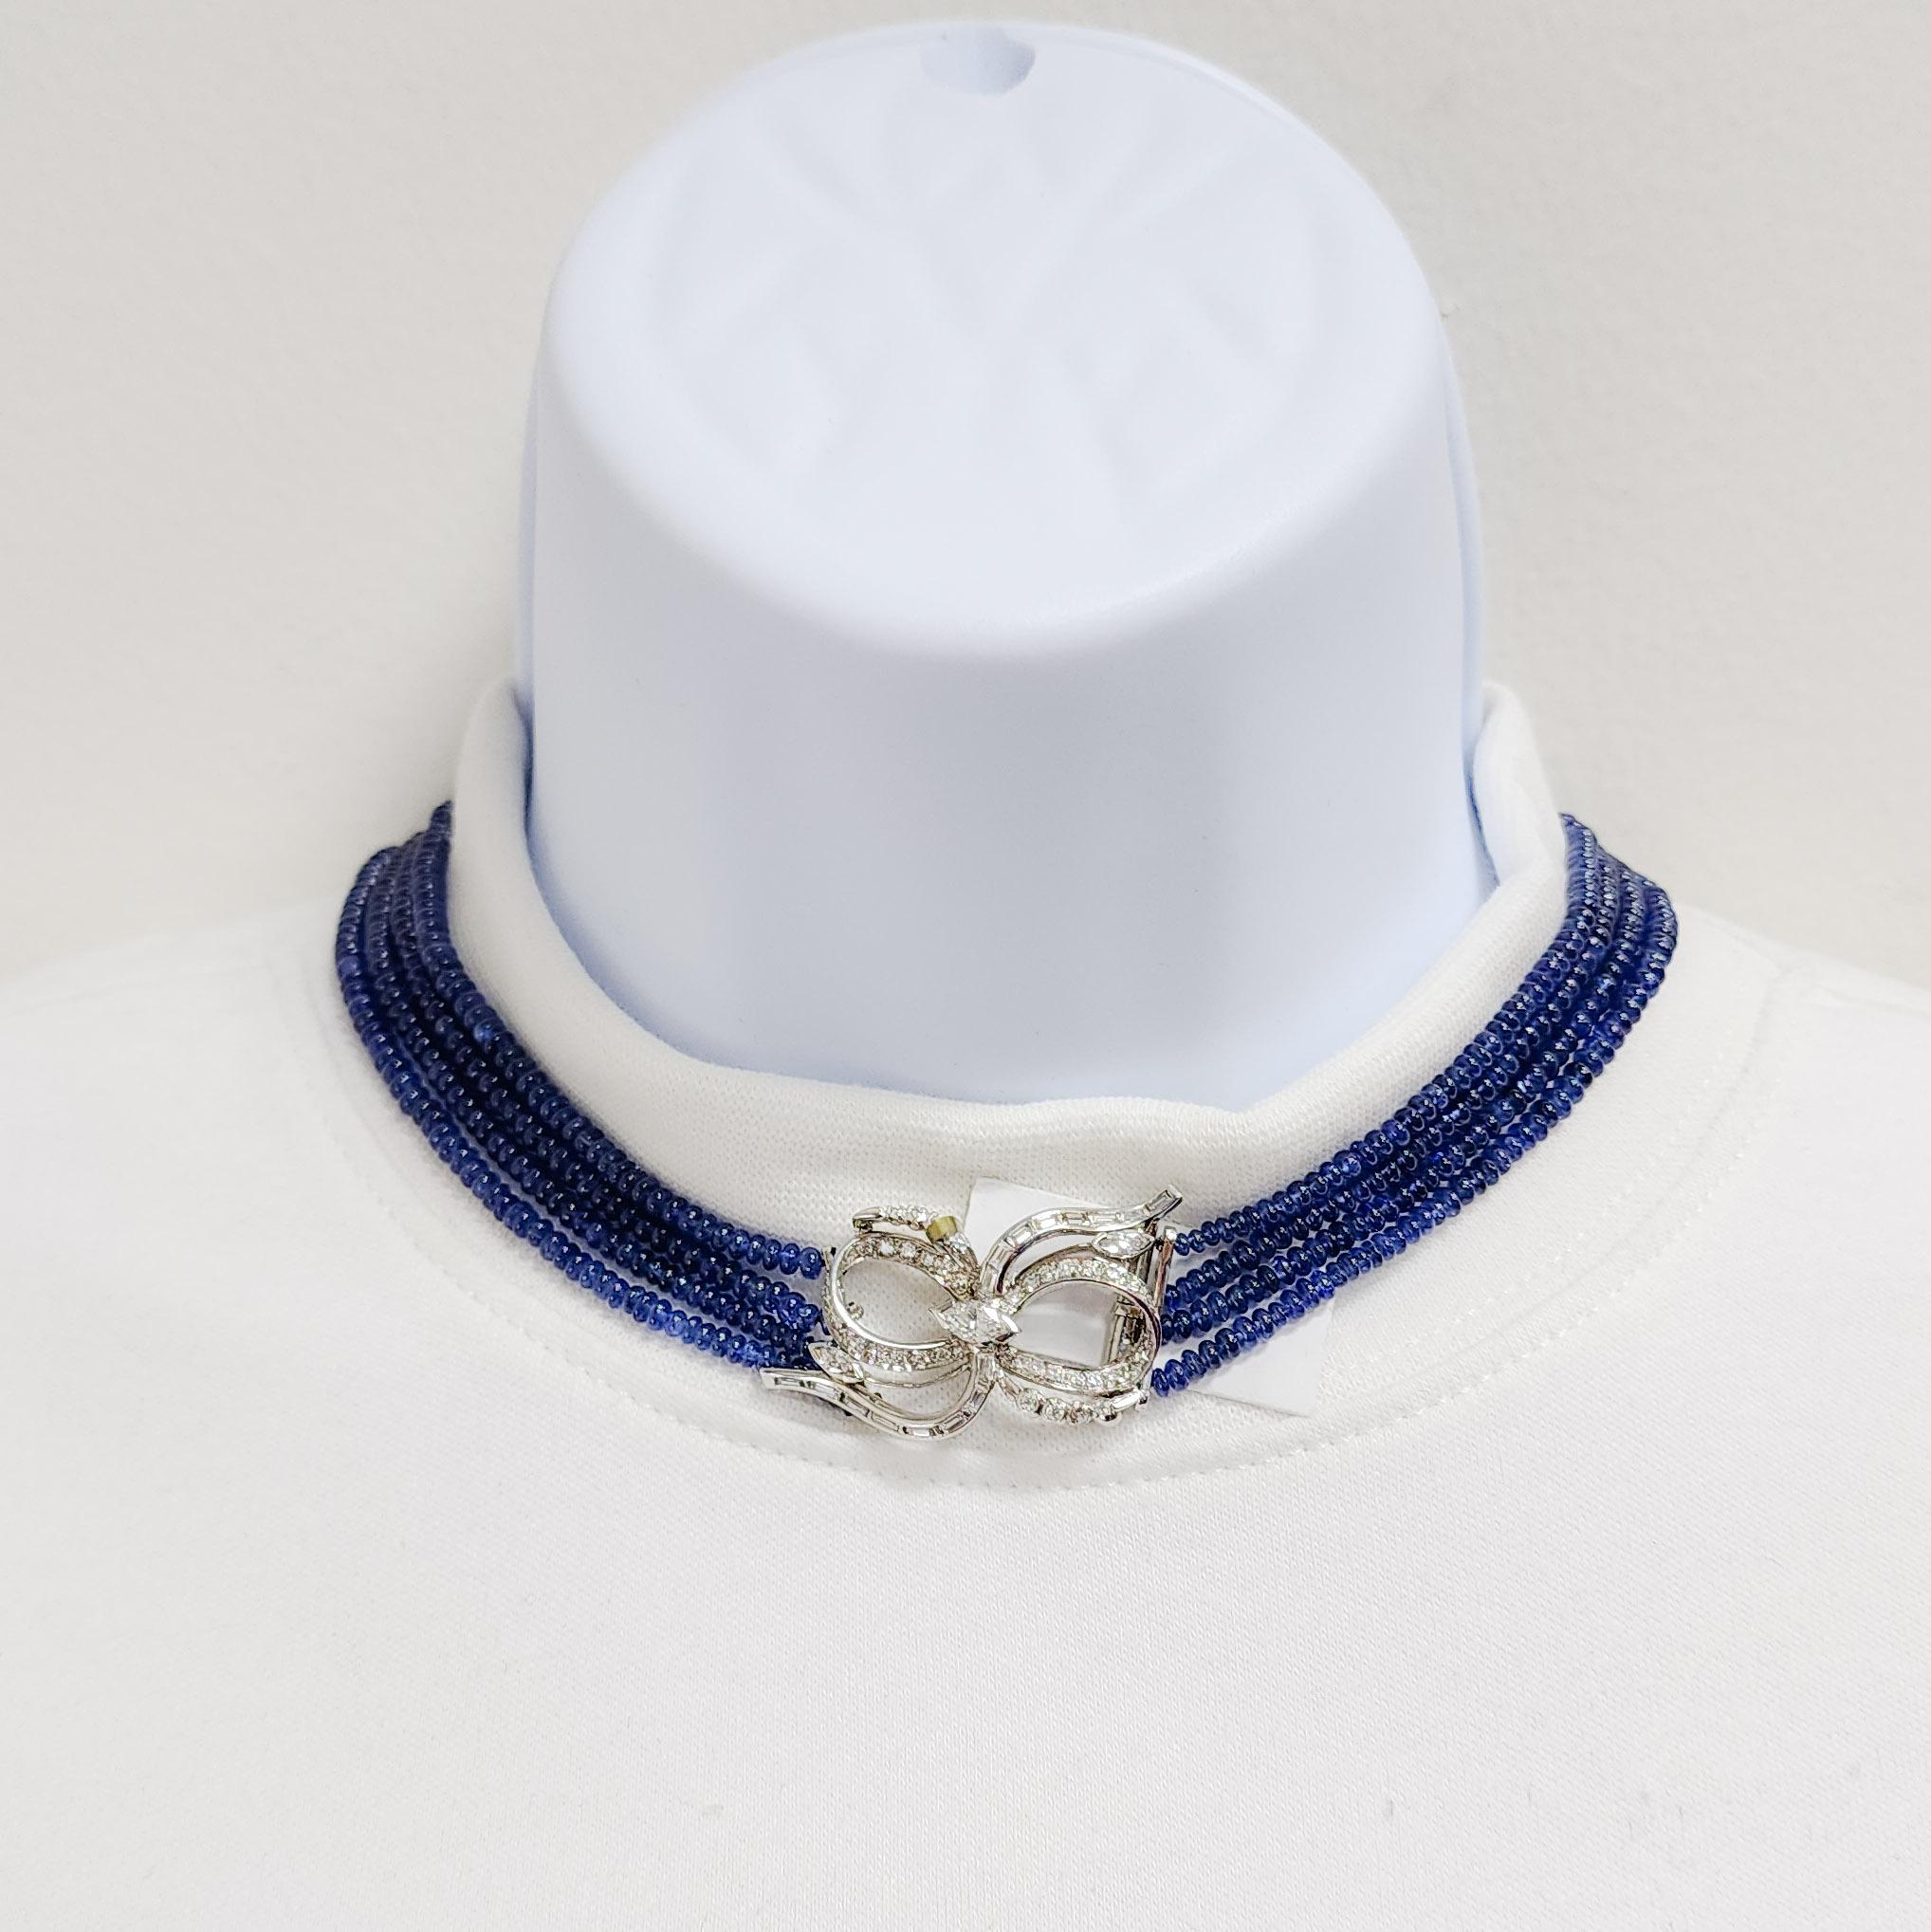 blue sapphire beads necklace designs